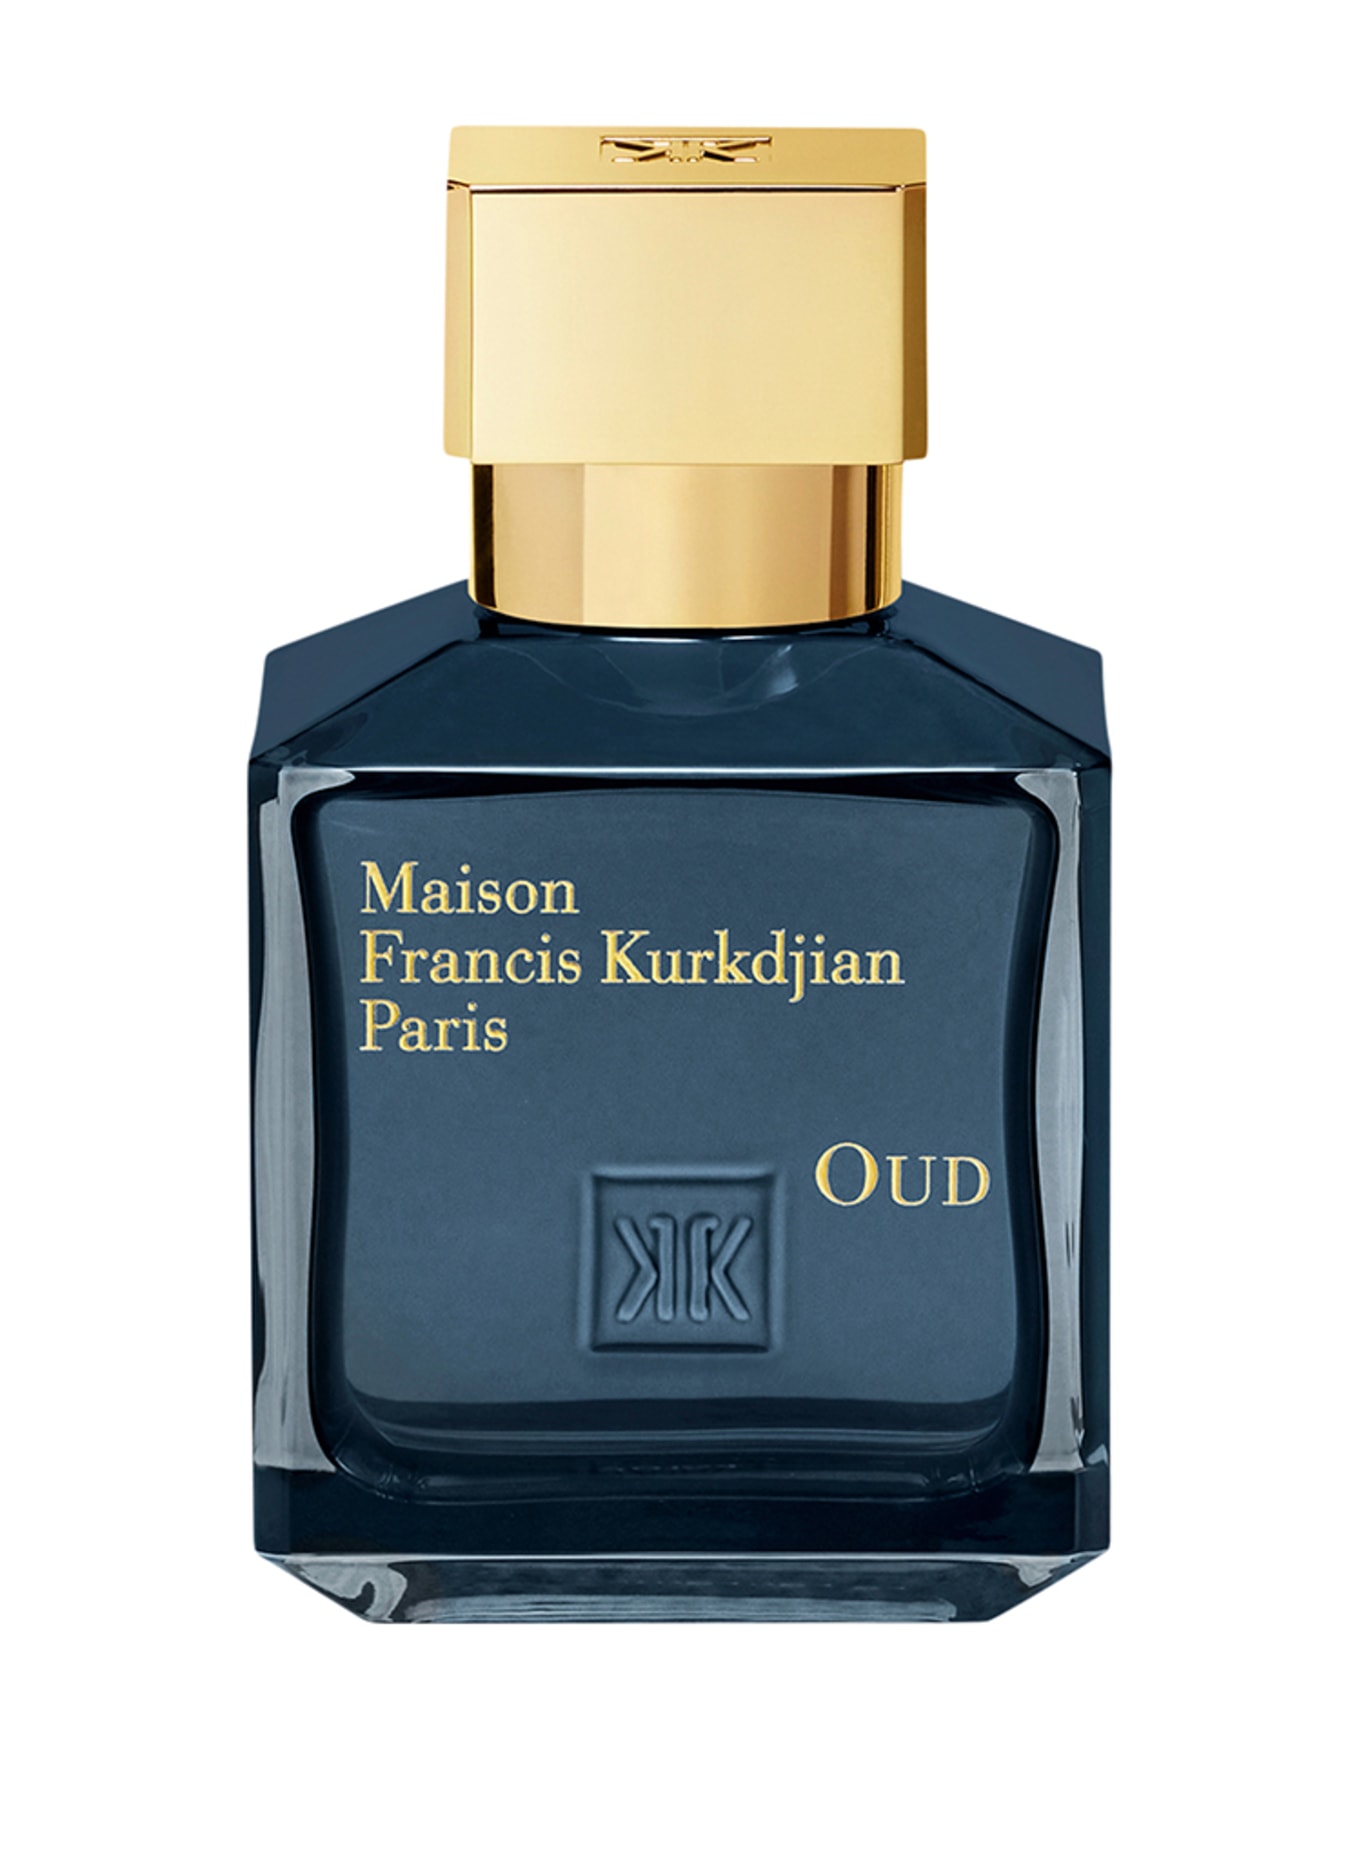 Maison Francis Kurkdjian Paris OUD (Bild 1)